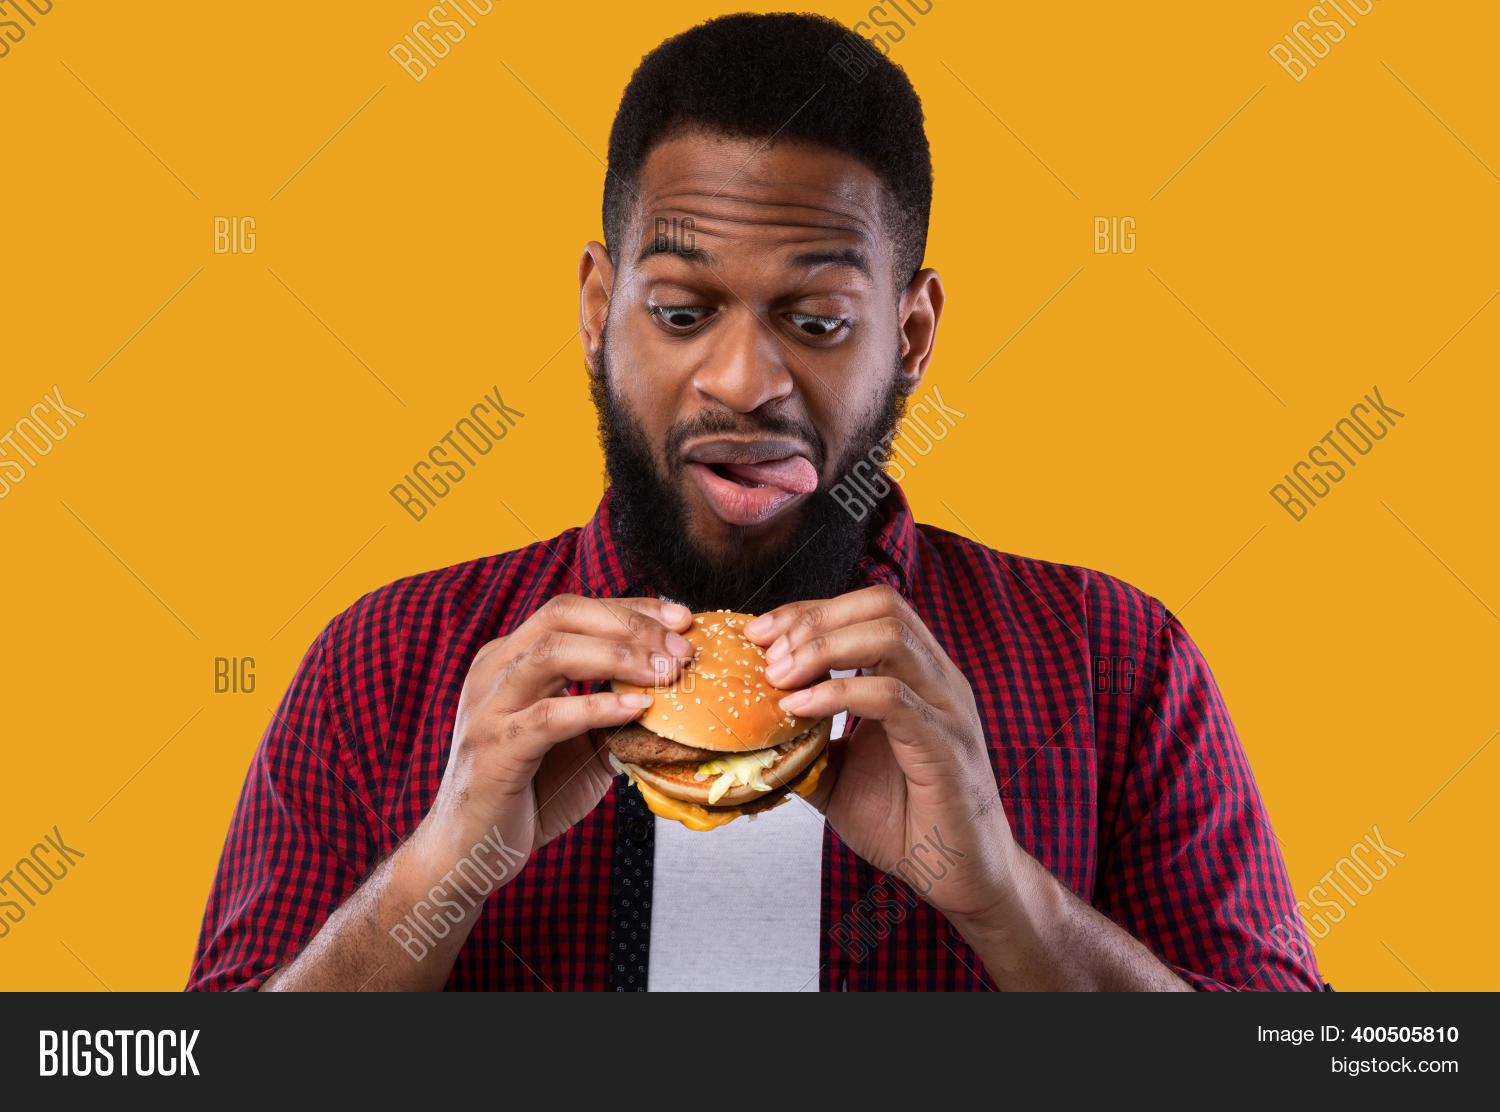 bahizi patrick share black guy eating hamburger photos